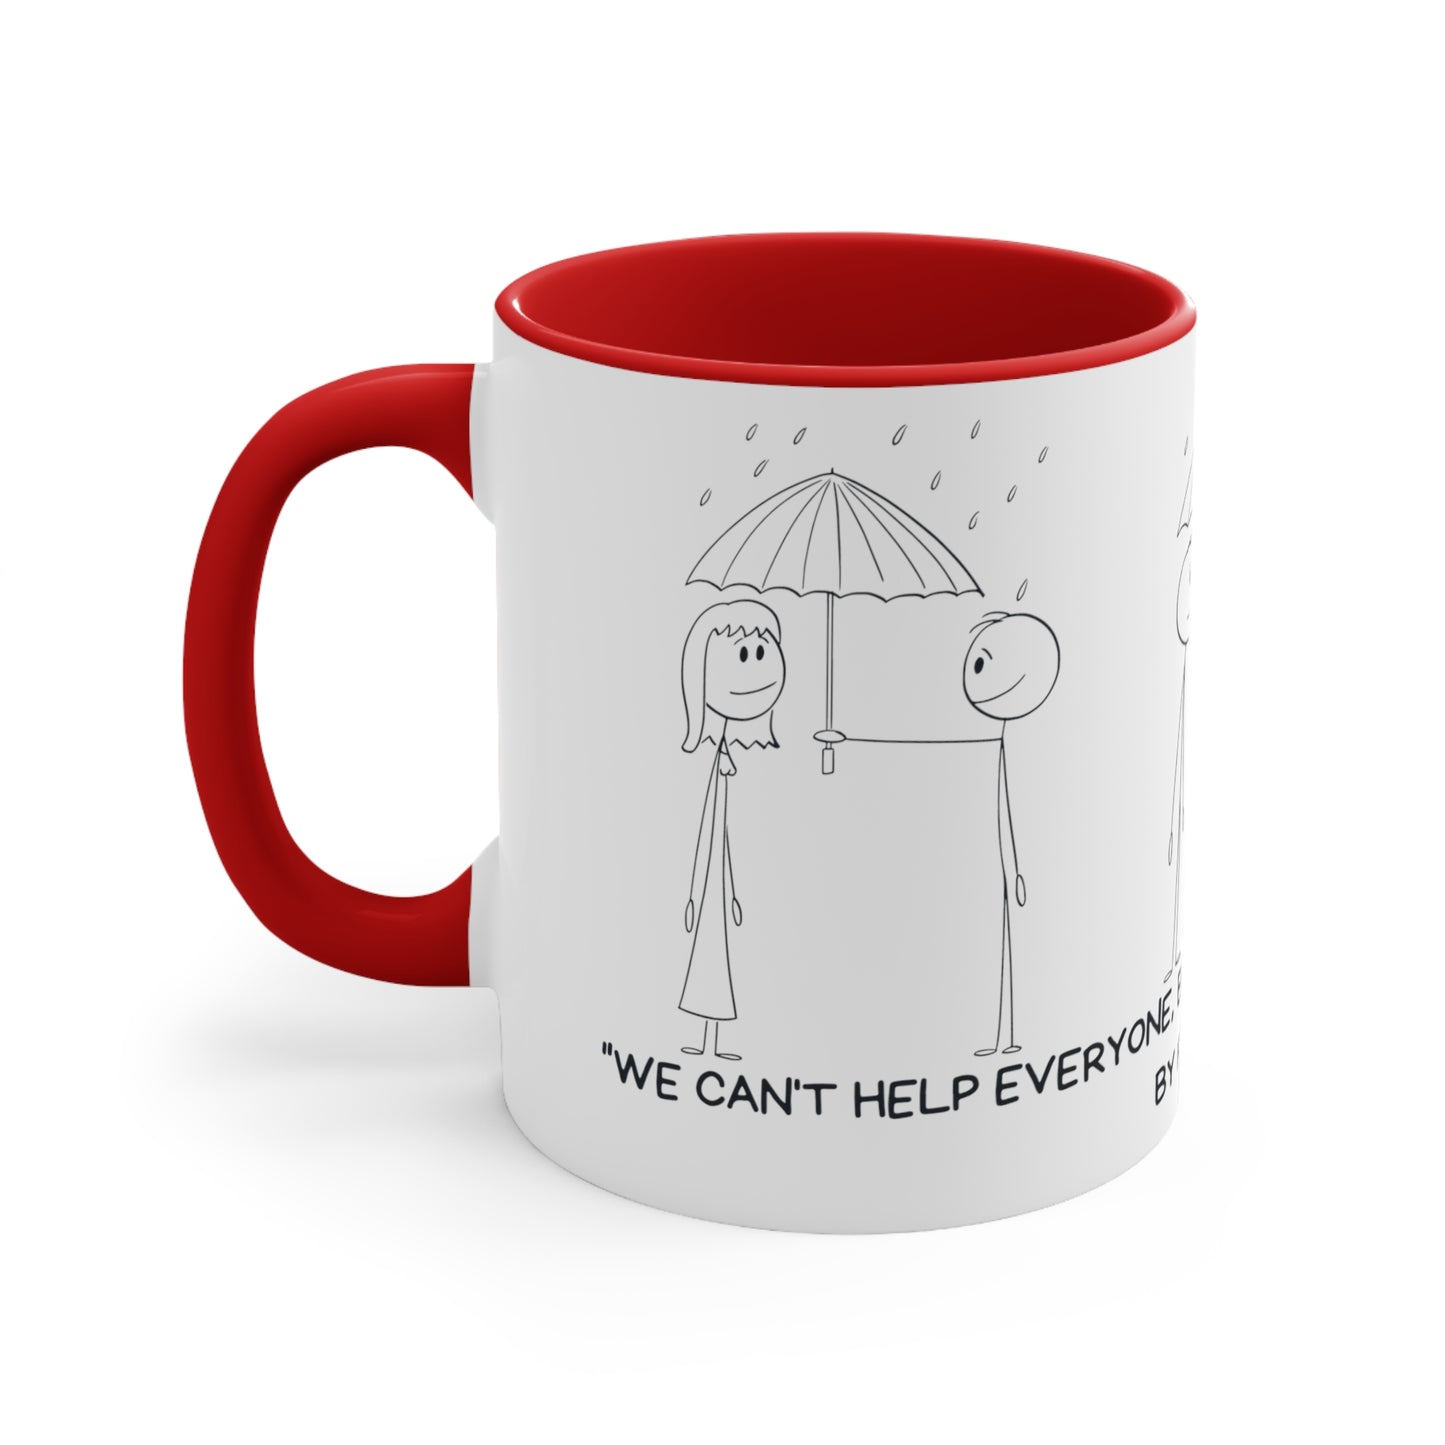 "Inspirational Message Ceramic Mug: Be Someone's Helping Hand"